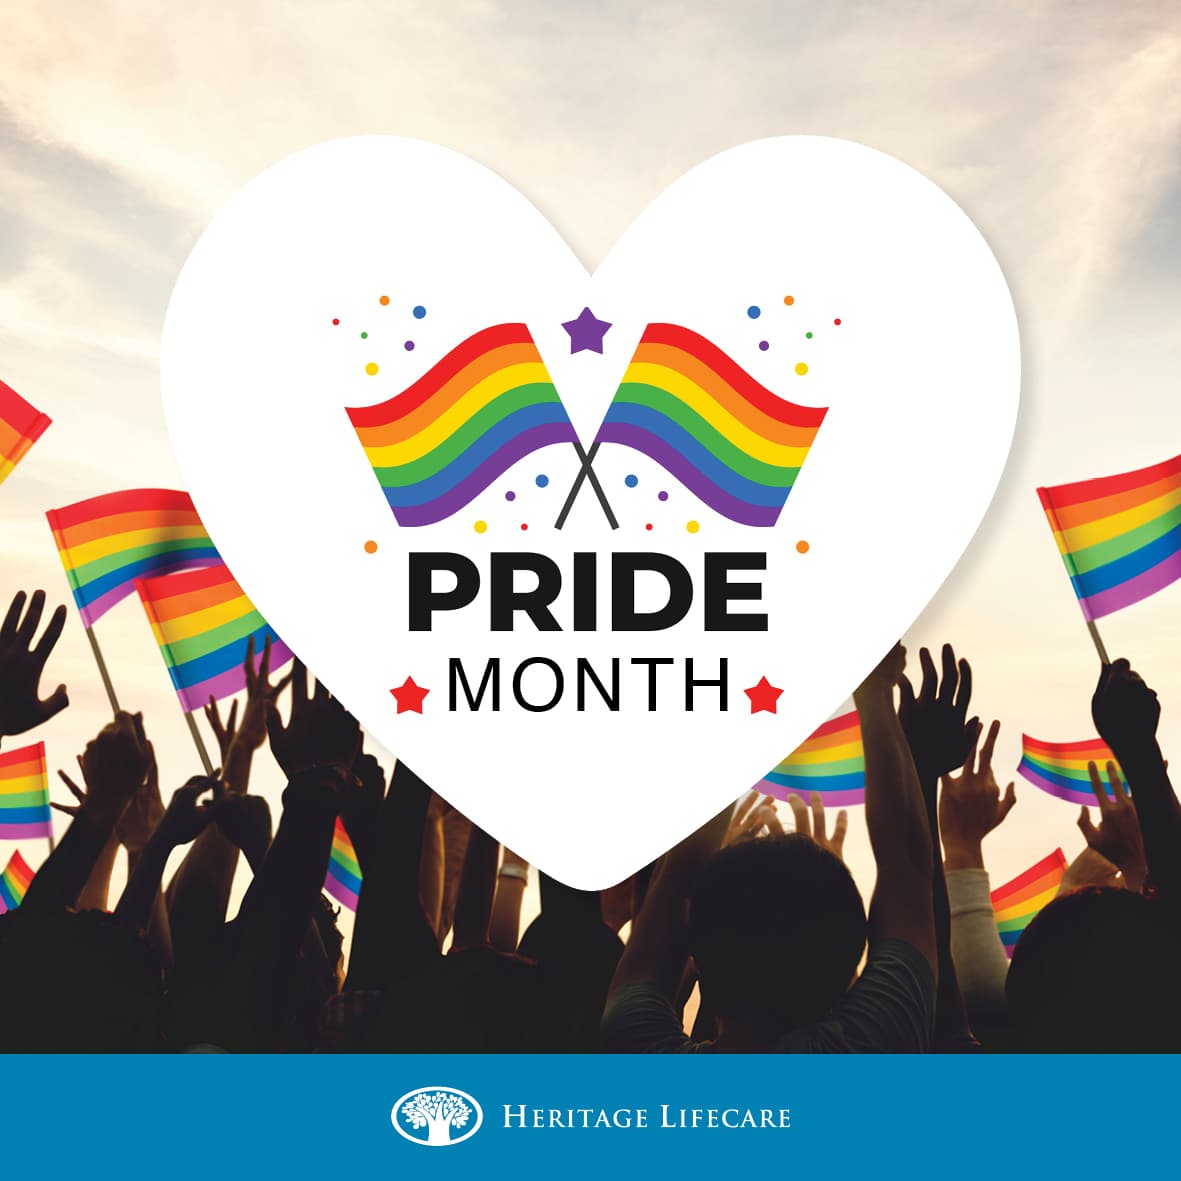 News & events • Happy Pride Month! • Heritage Lifecare